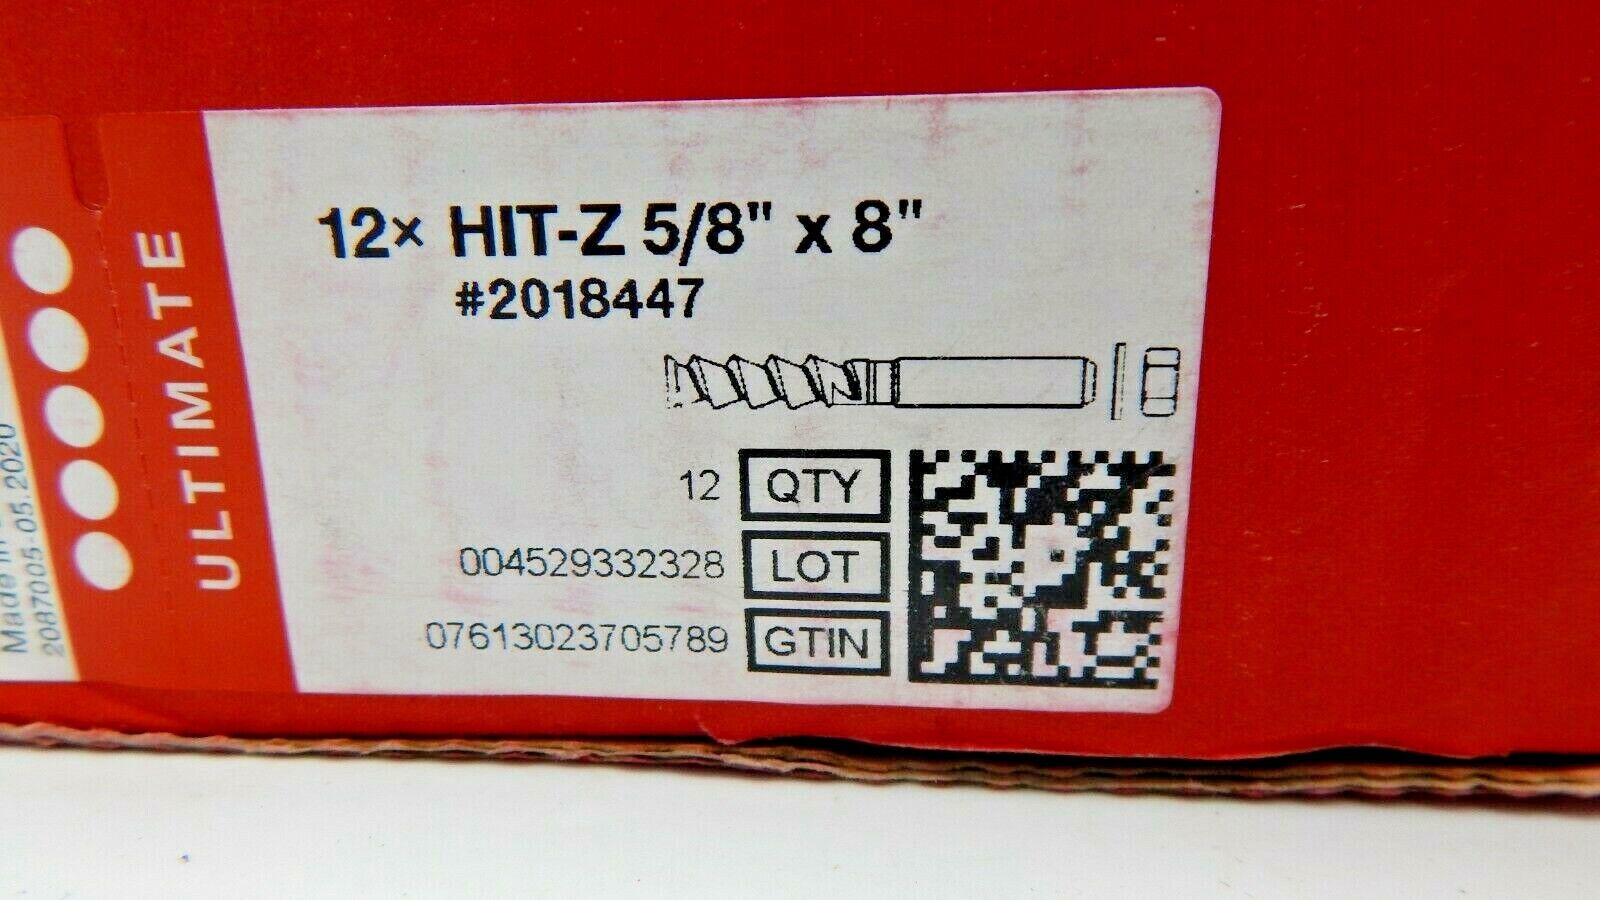 Hilti 2018447 Anchor Rod HIT-Z 5/8